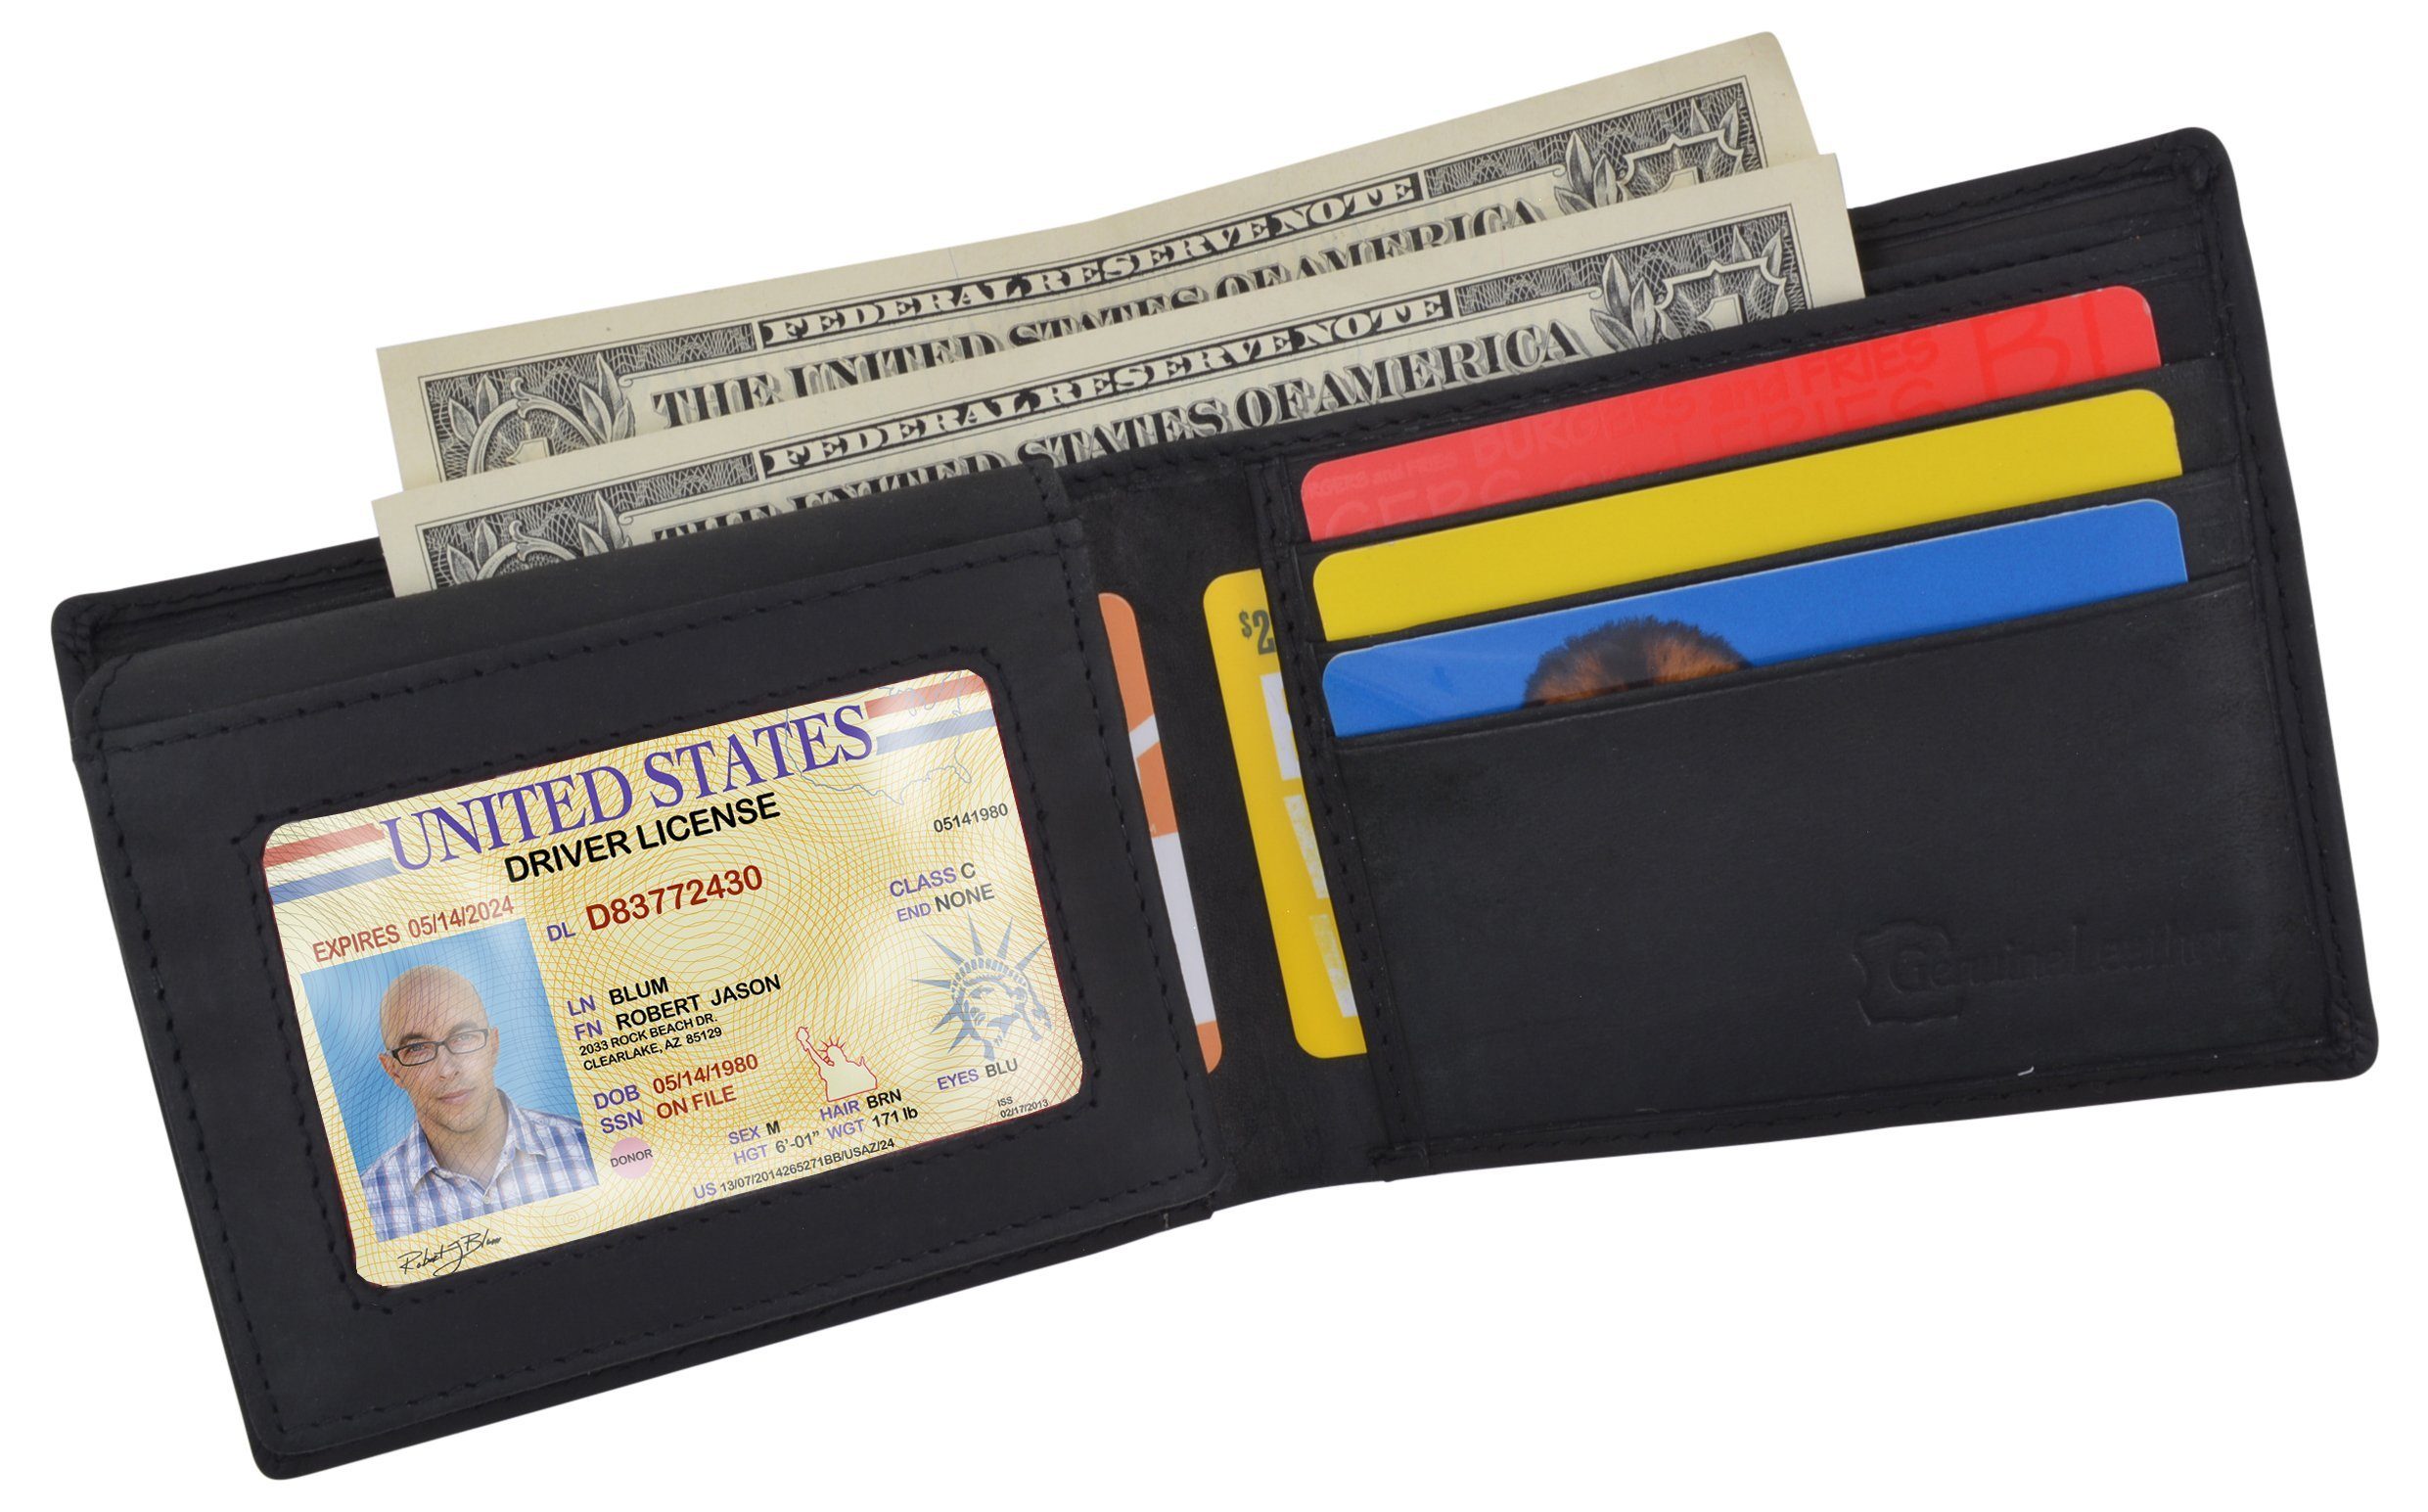 AFONiE RFID Rustic Men Wallet-ARIZONA Design Craft Stamp